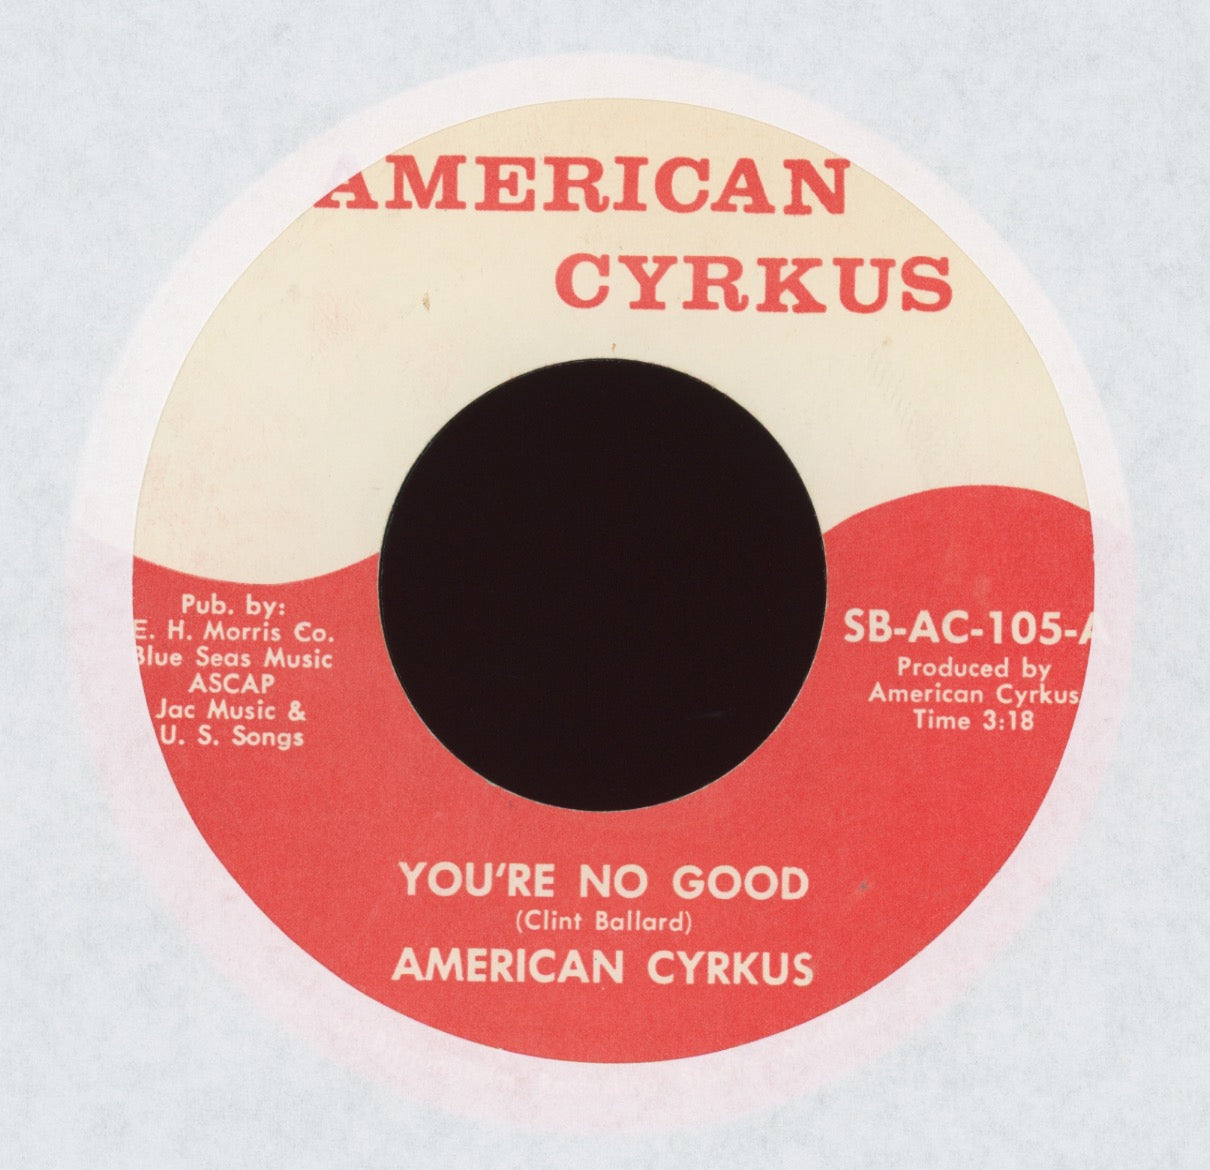 American Cyrkus - Hate Can't Last on American Cyrkus